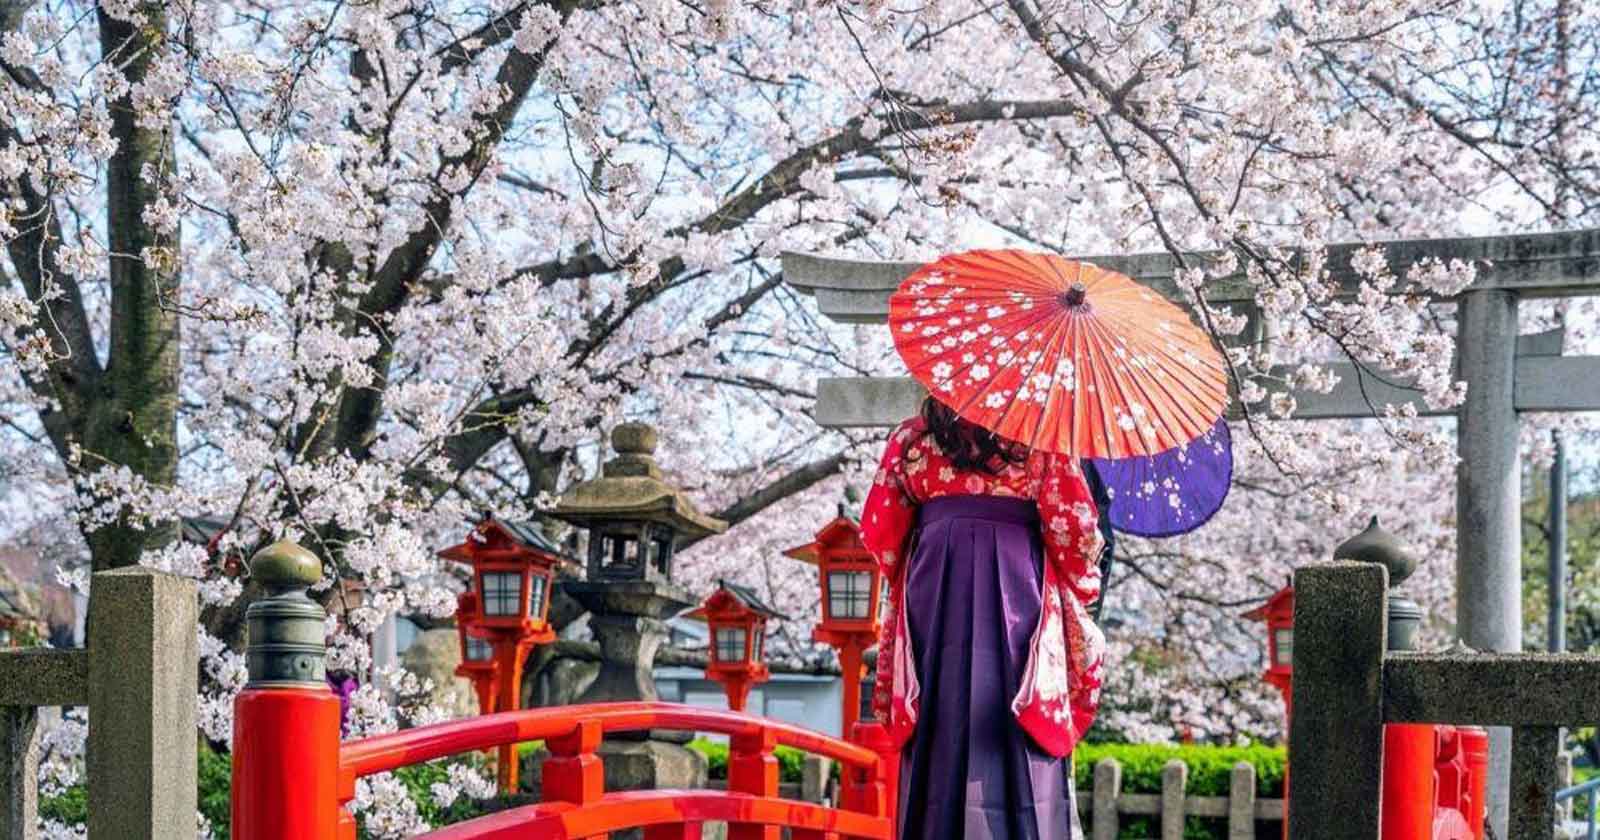 Travel insurance for japan trip - Visit Japan - Japan trip - Best time to visit Japan - Japan visa